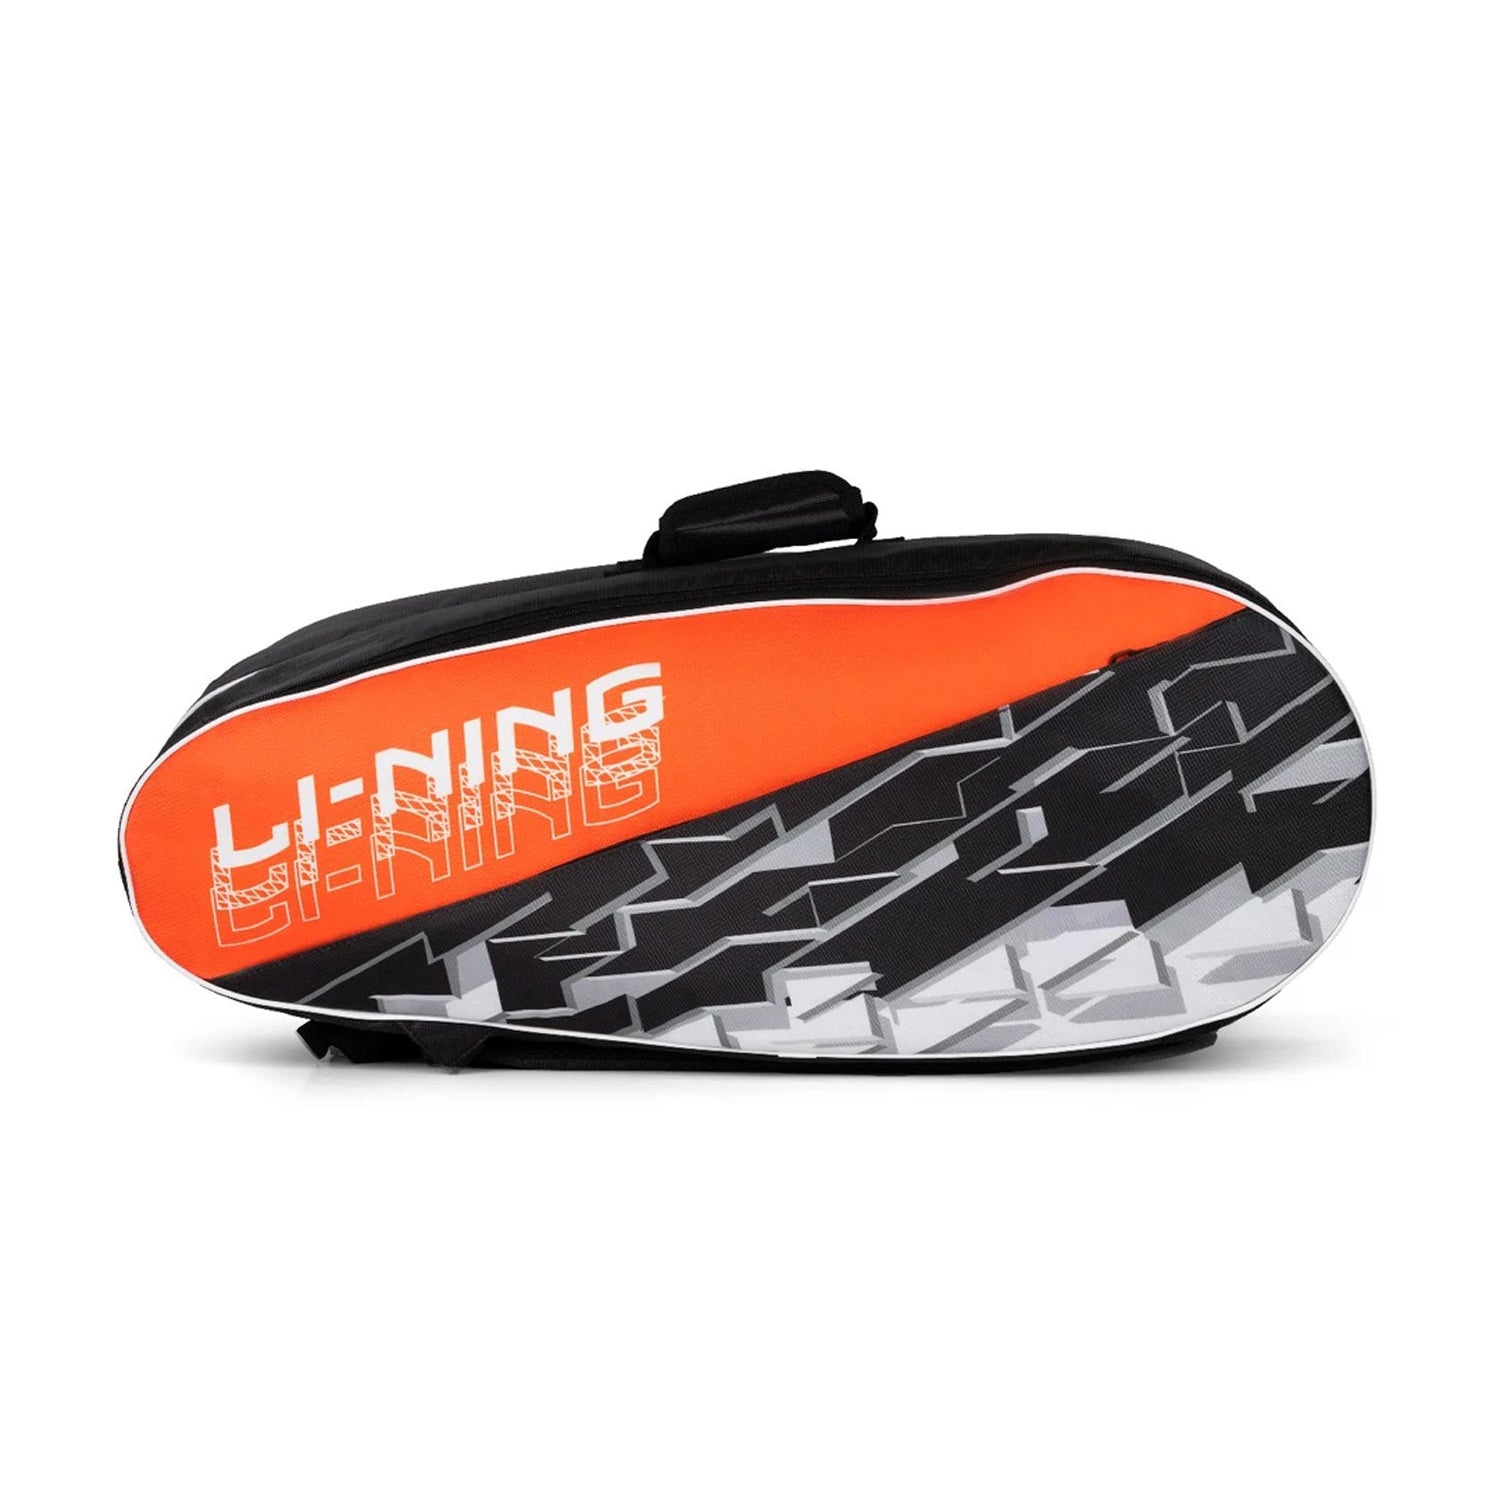 Li-Ning Polygon Badminton Kit Bag - Best Price online Prokicksports.com